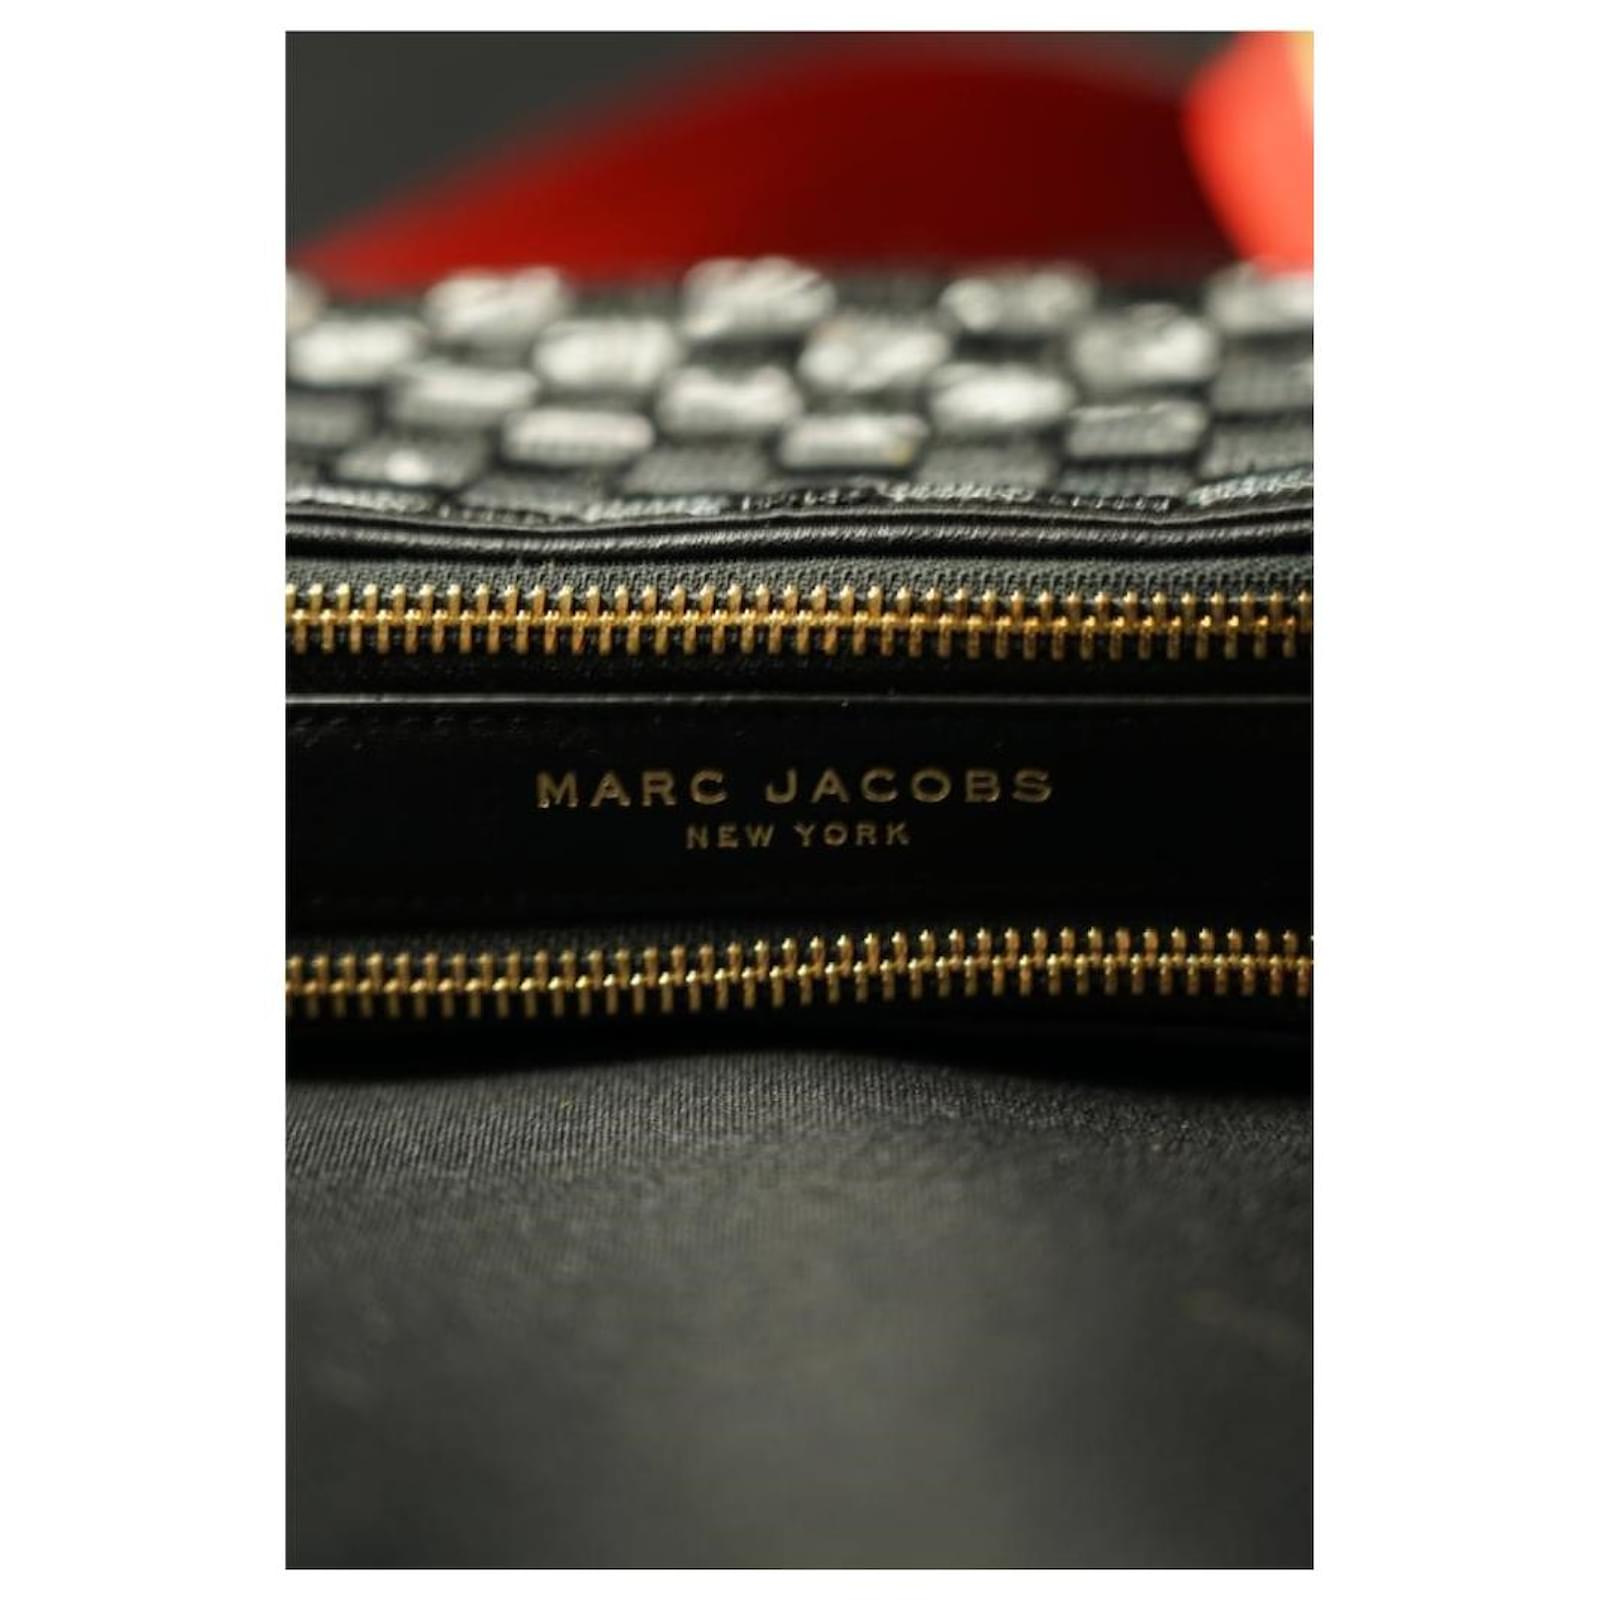 RARE!! - UNOPENED!! - Marc Jacobs Snapshot Watersnake Leather Camera Bag -  Black